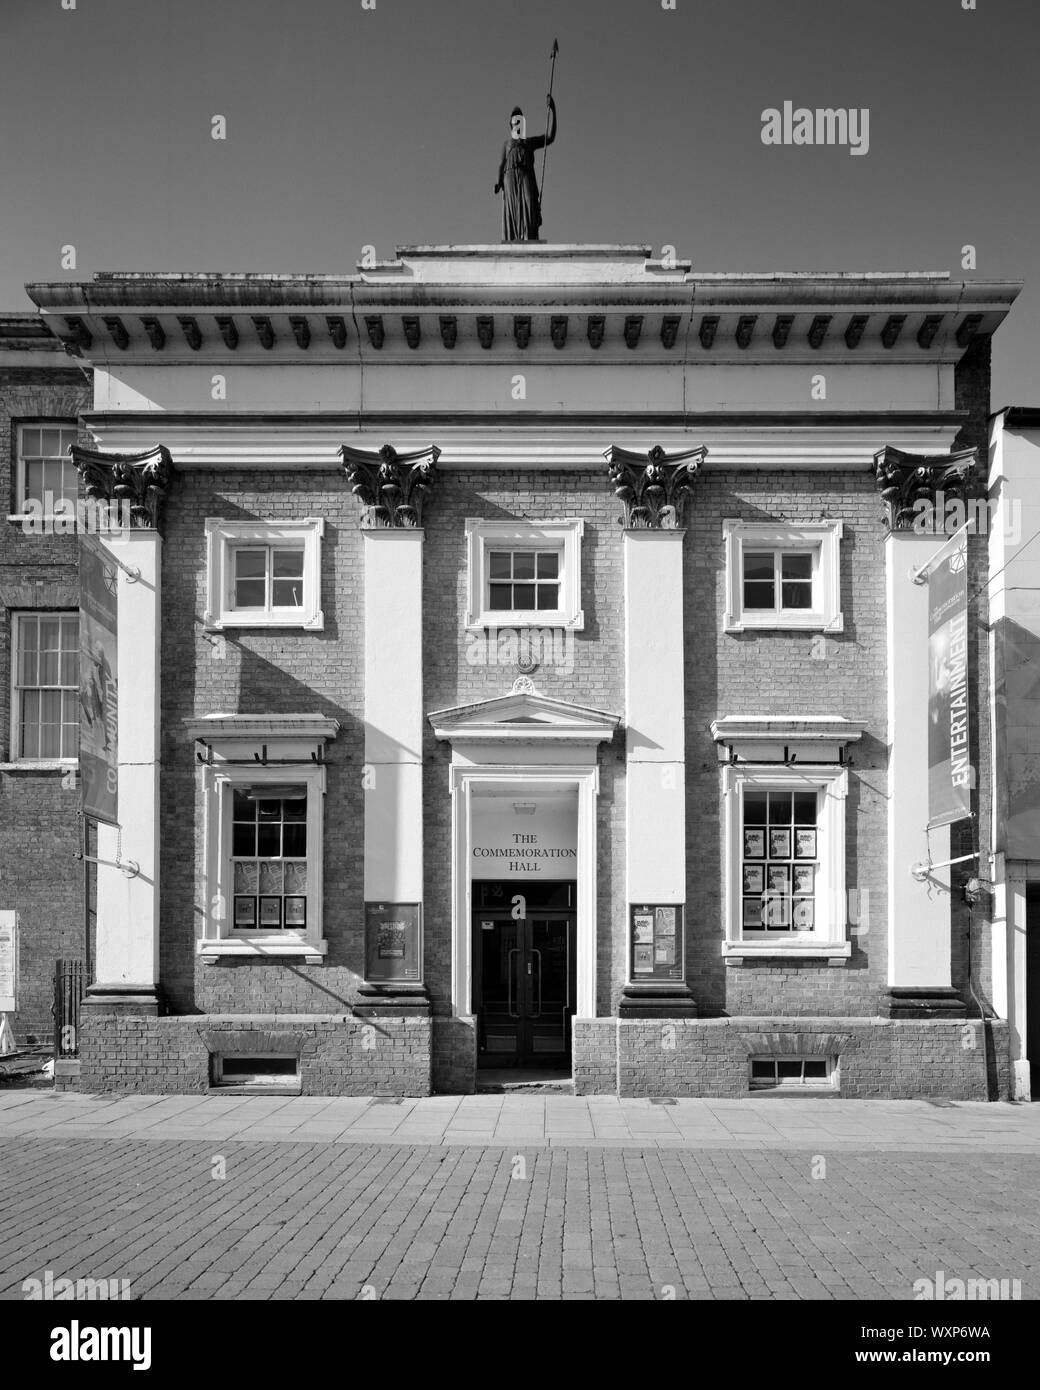 The Commemoration Hall Huntingdon Cambridgeshire England Stock Photo